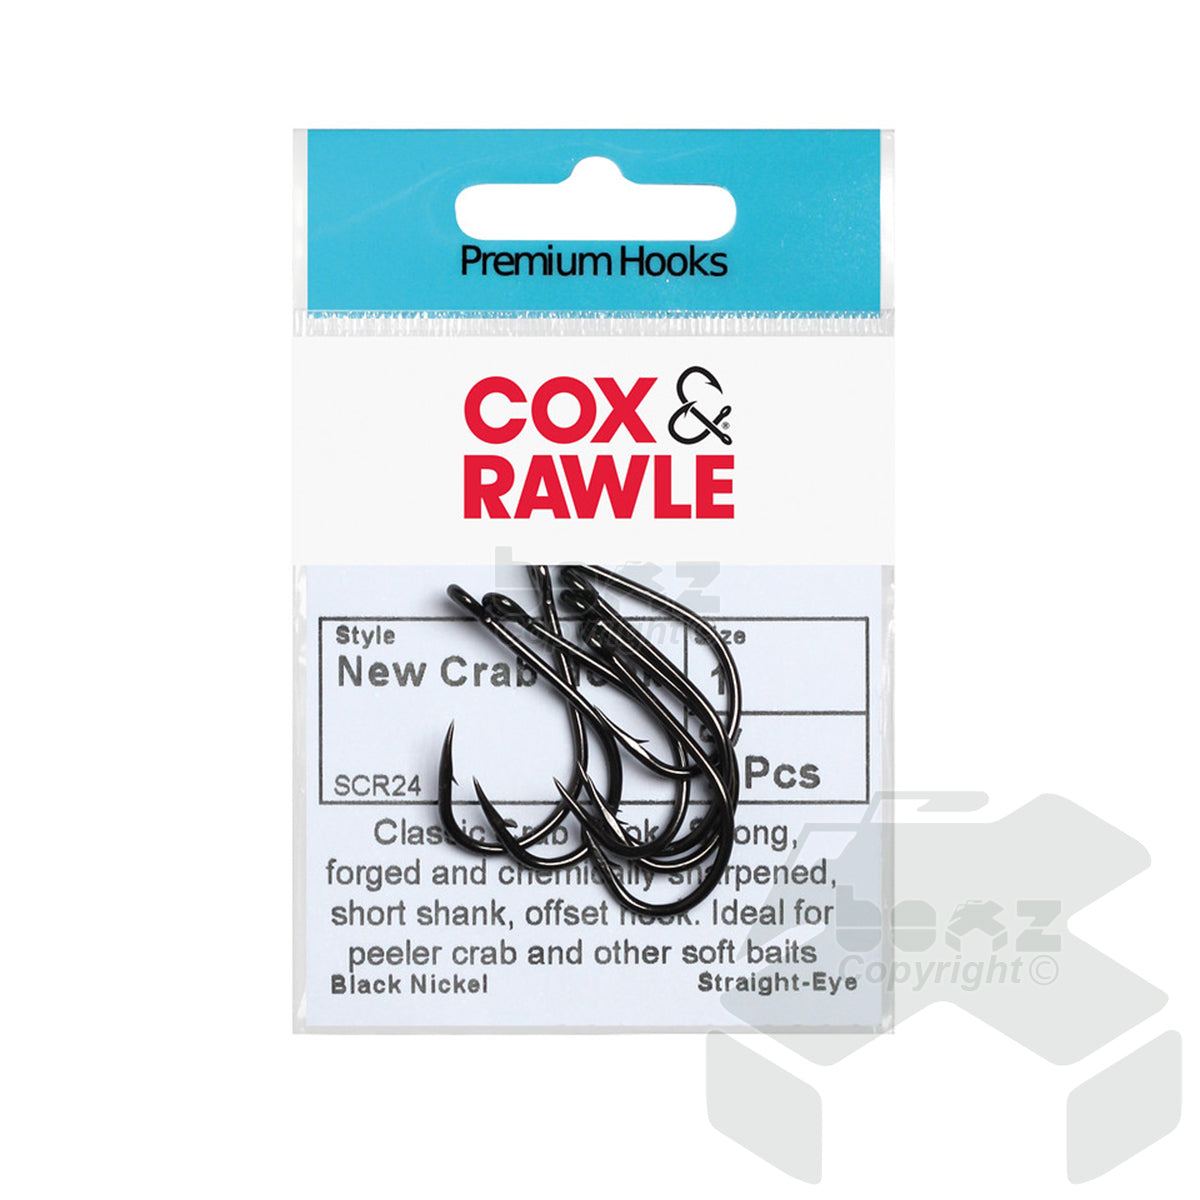 Cox & Rawle Crab Hooks